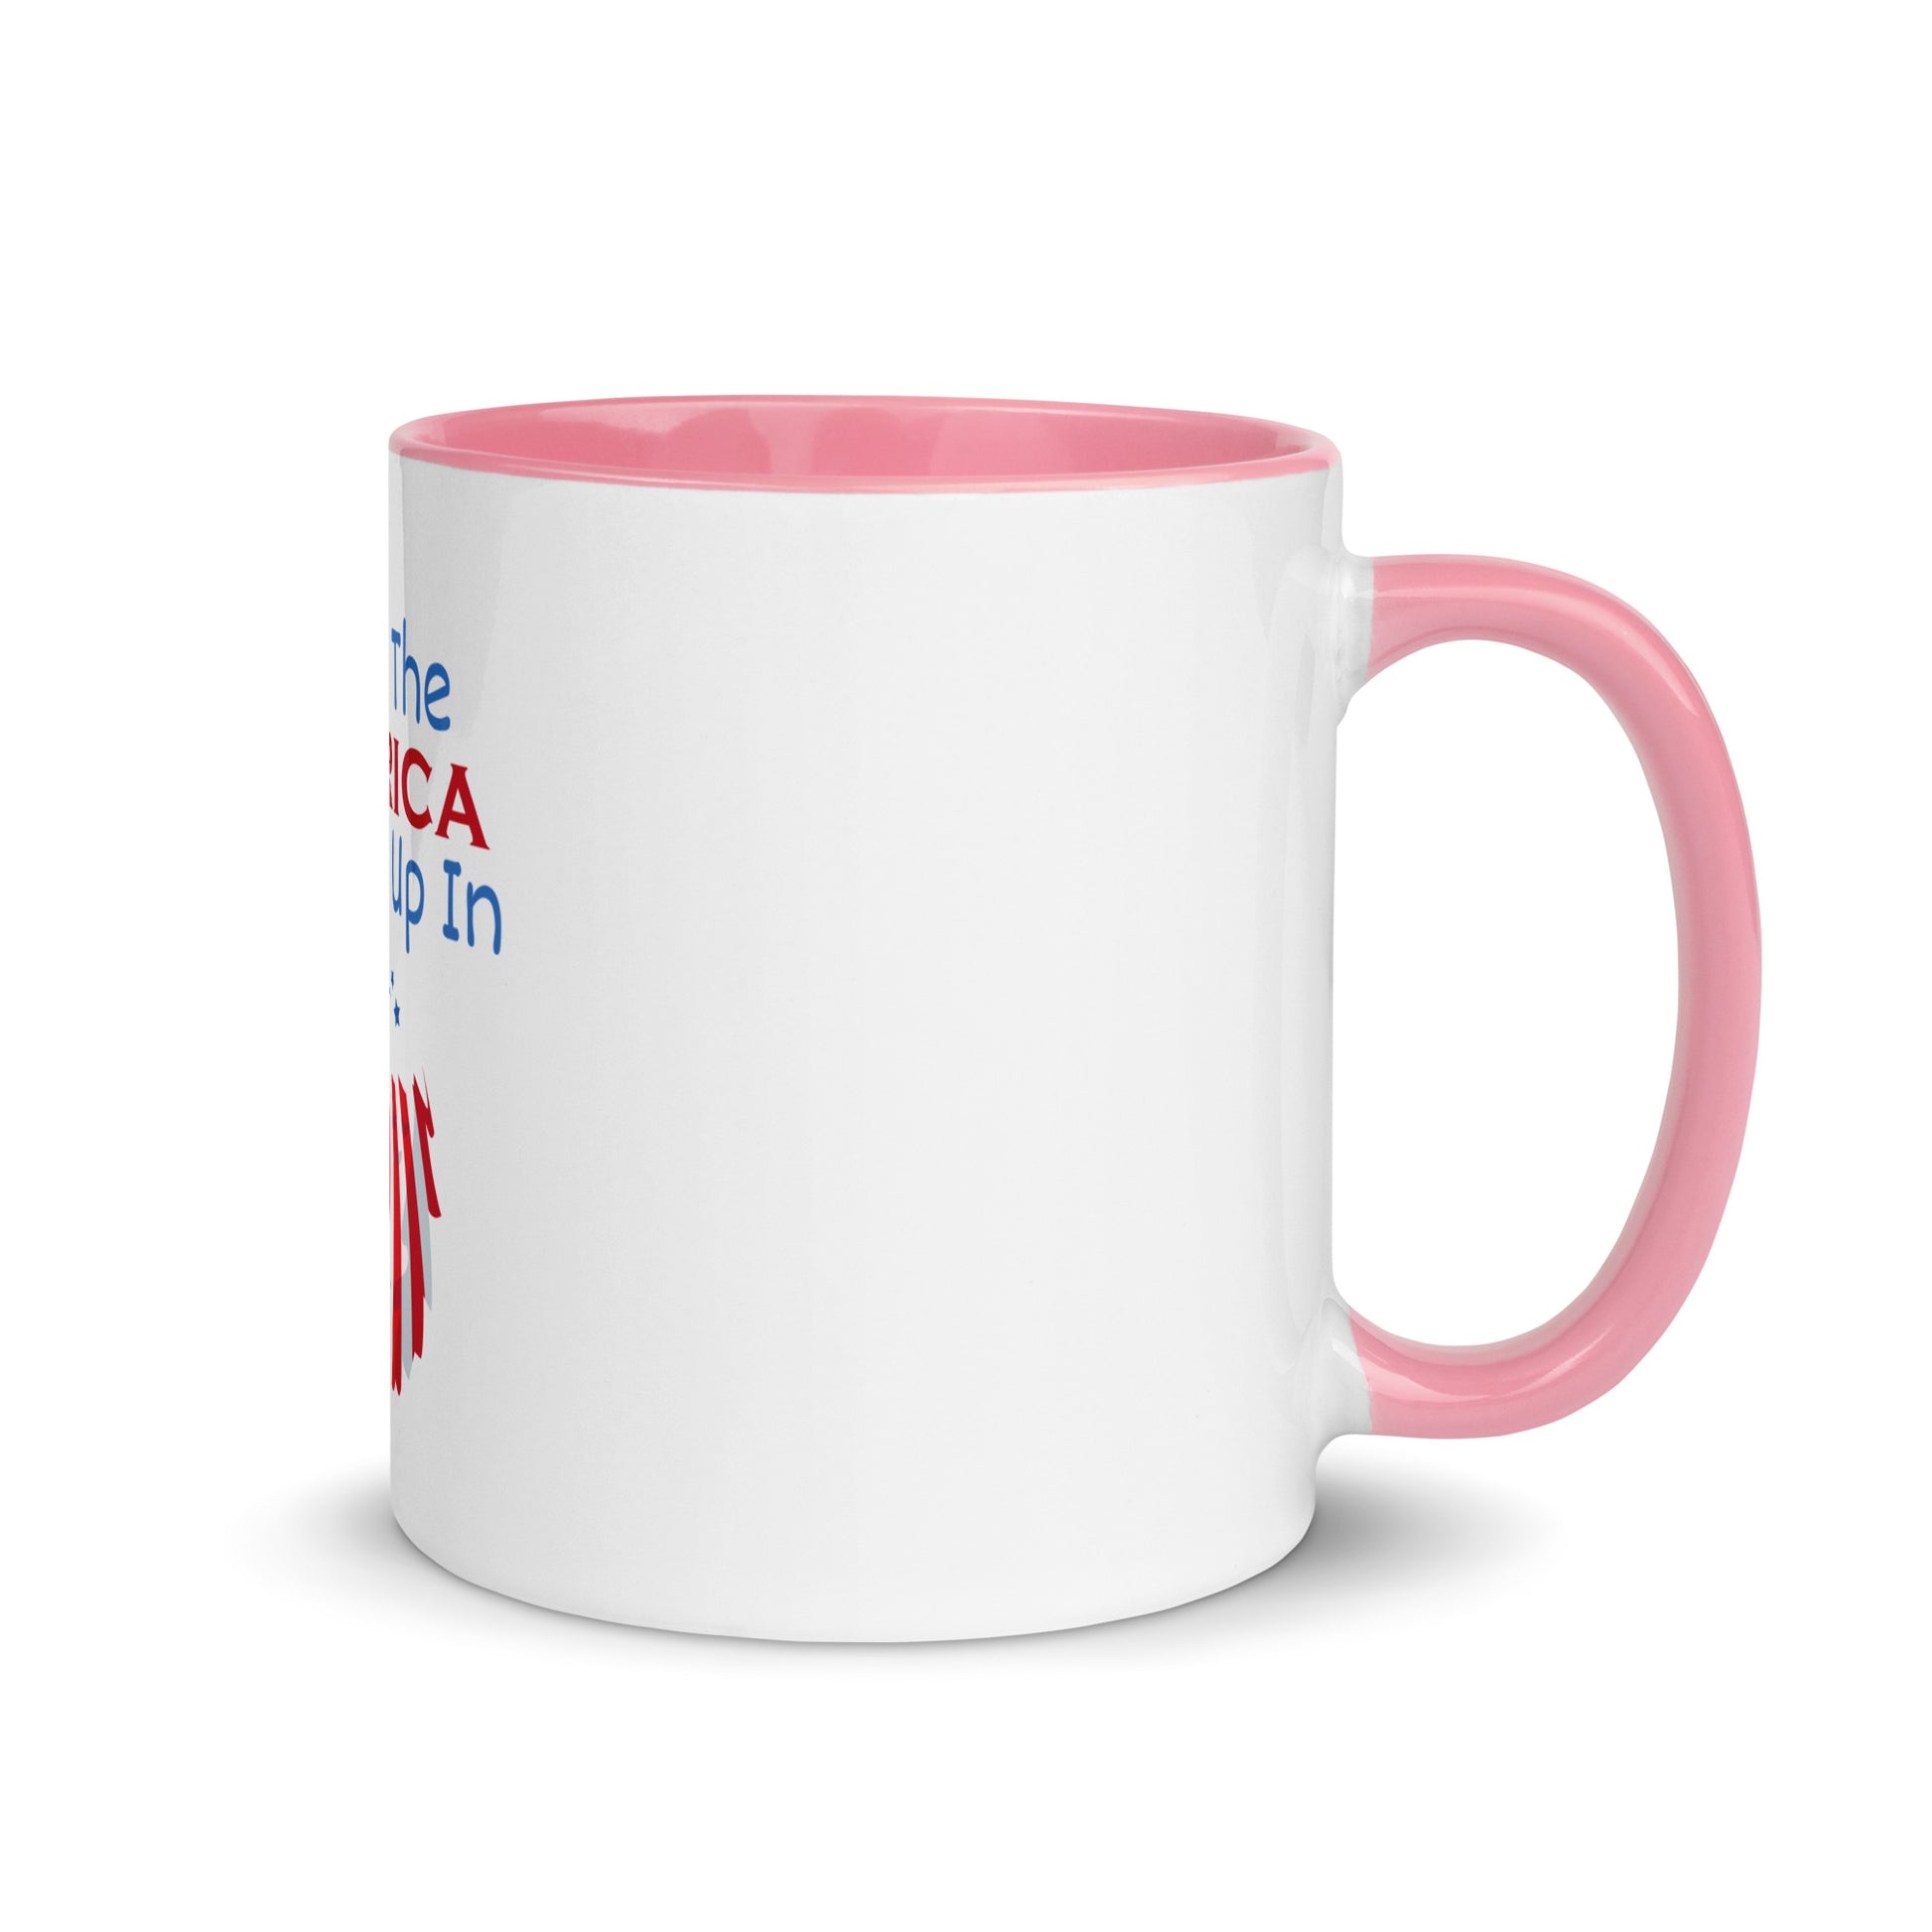 Eco-friendly made-to-order mug celebrating America's cherished past